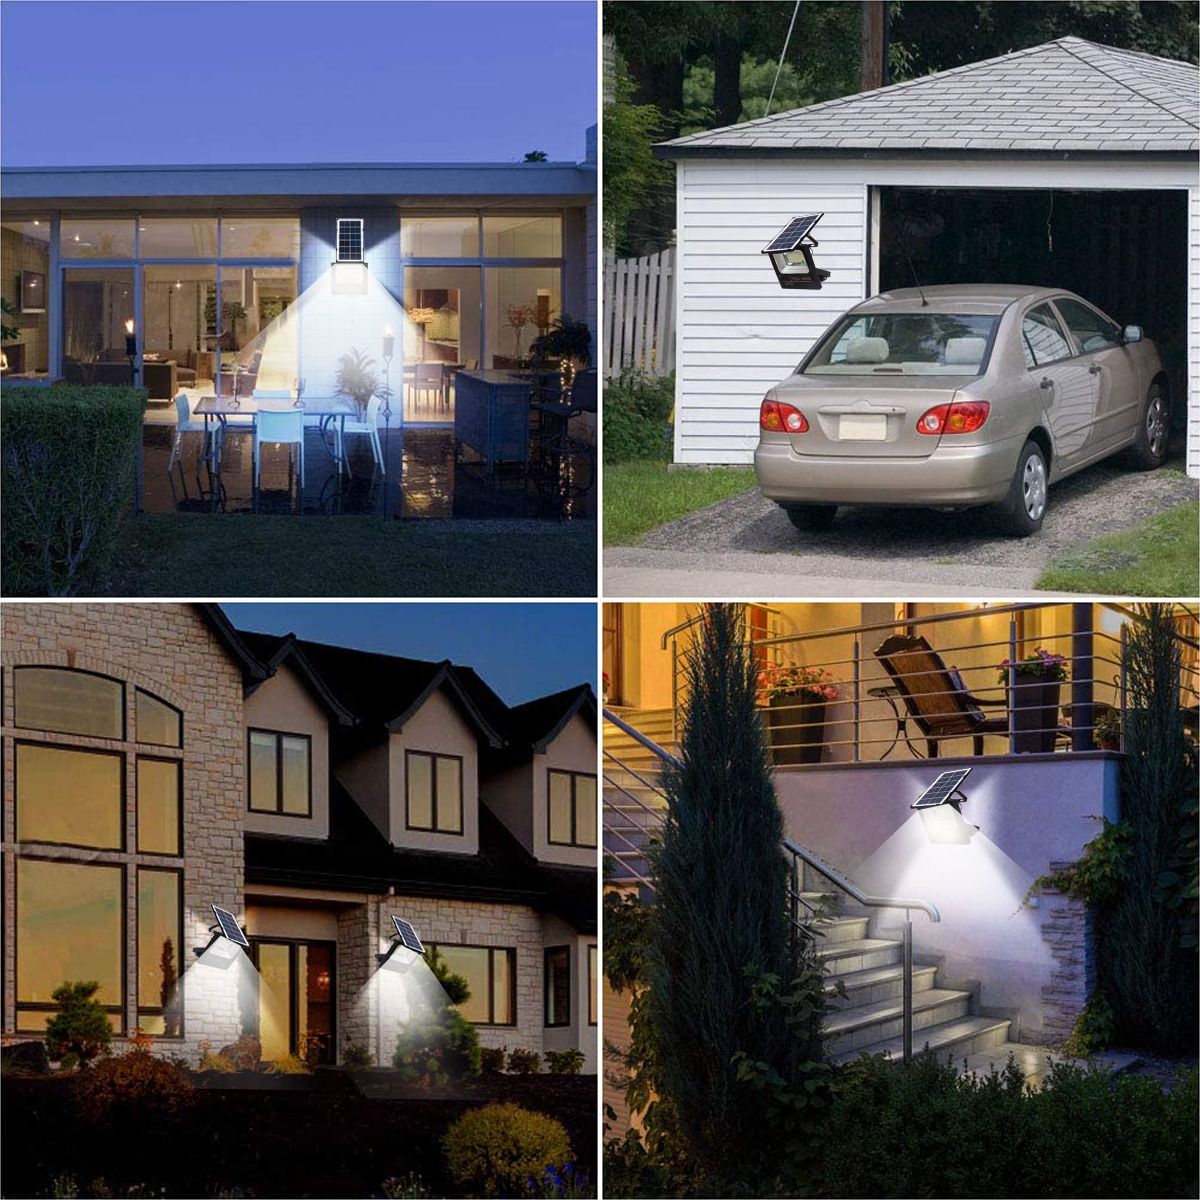 129LED-Solar-Light-Street-Flood-Lamp-Outdoor-Waterproof-Garden-Spotlight--Remote-Control-1725240